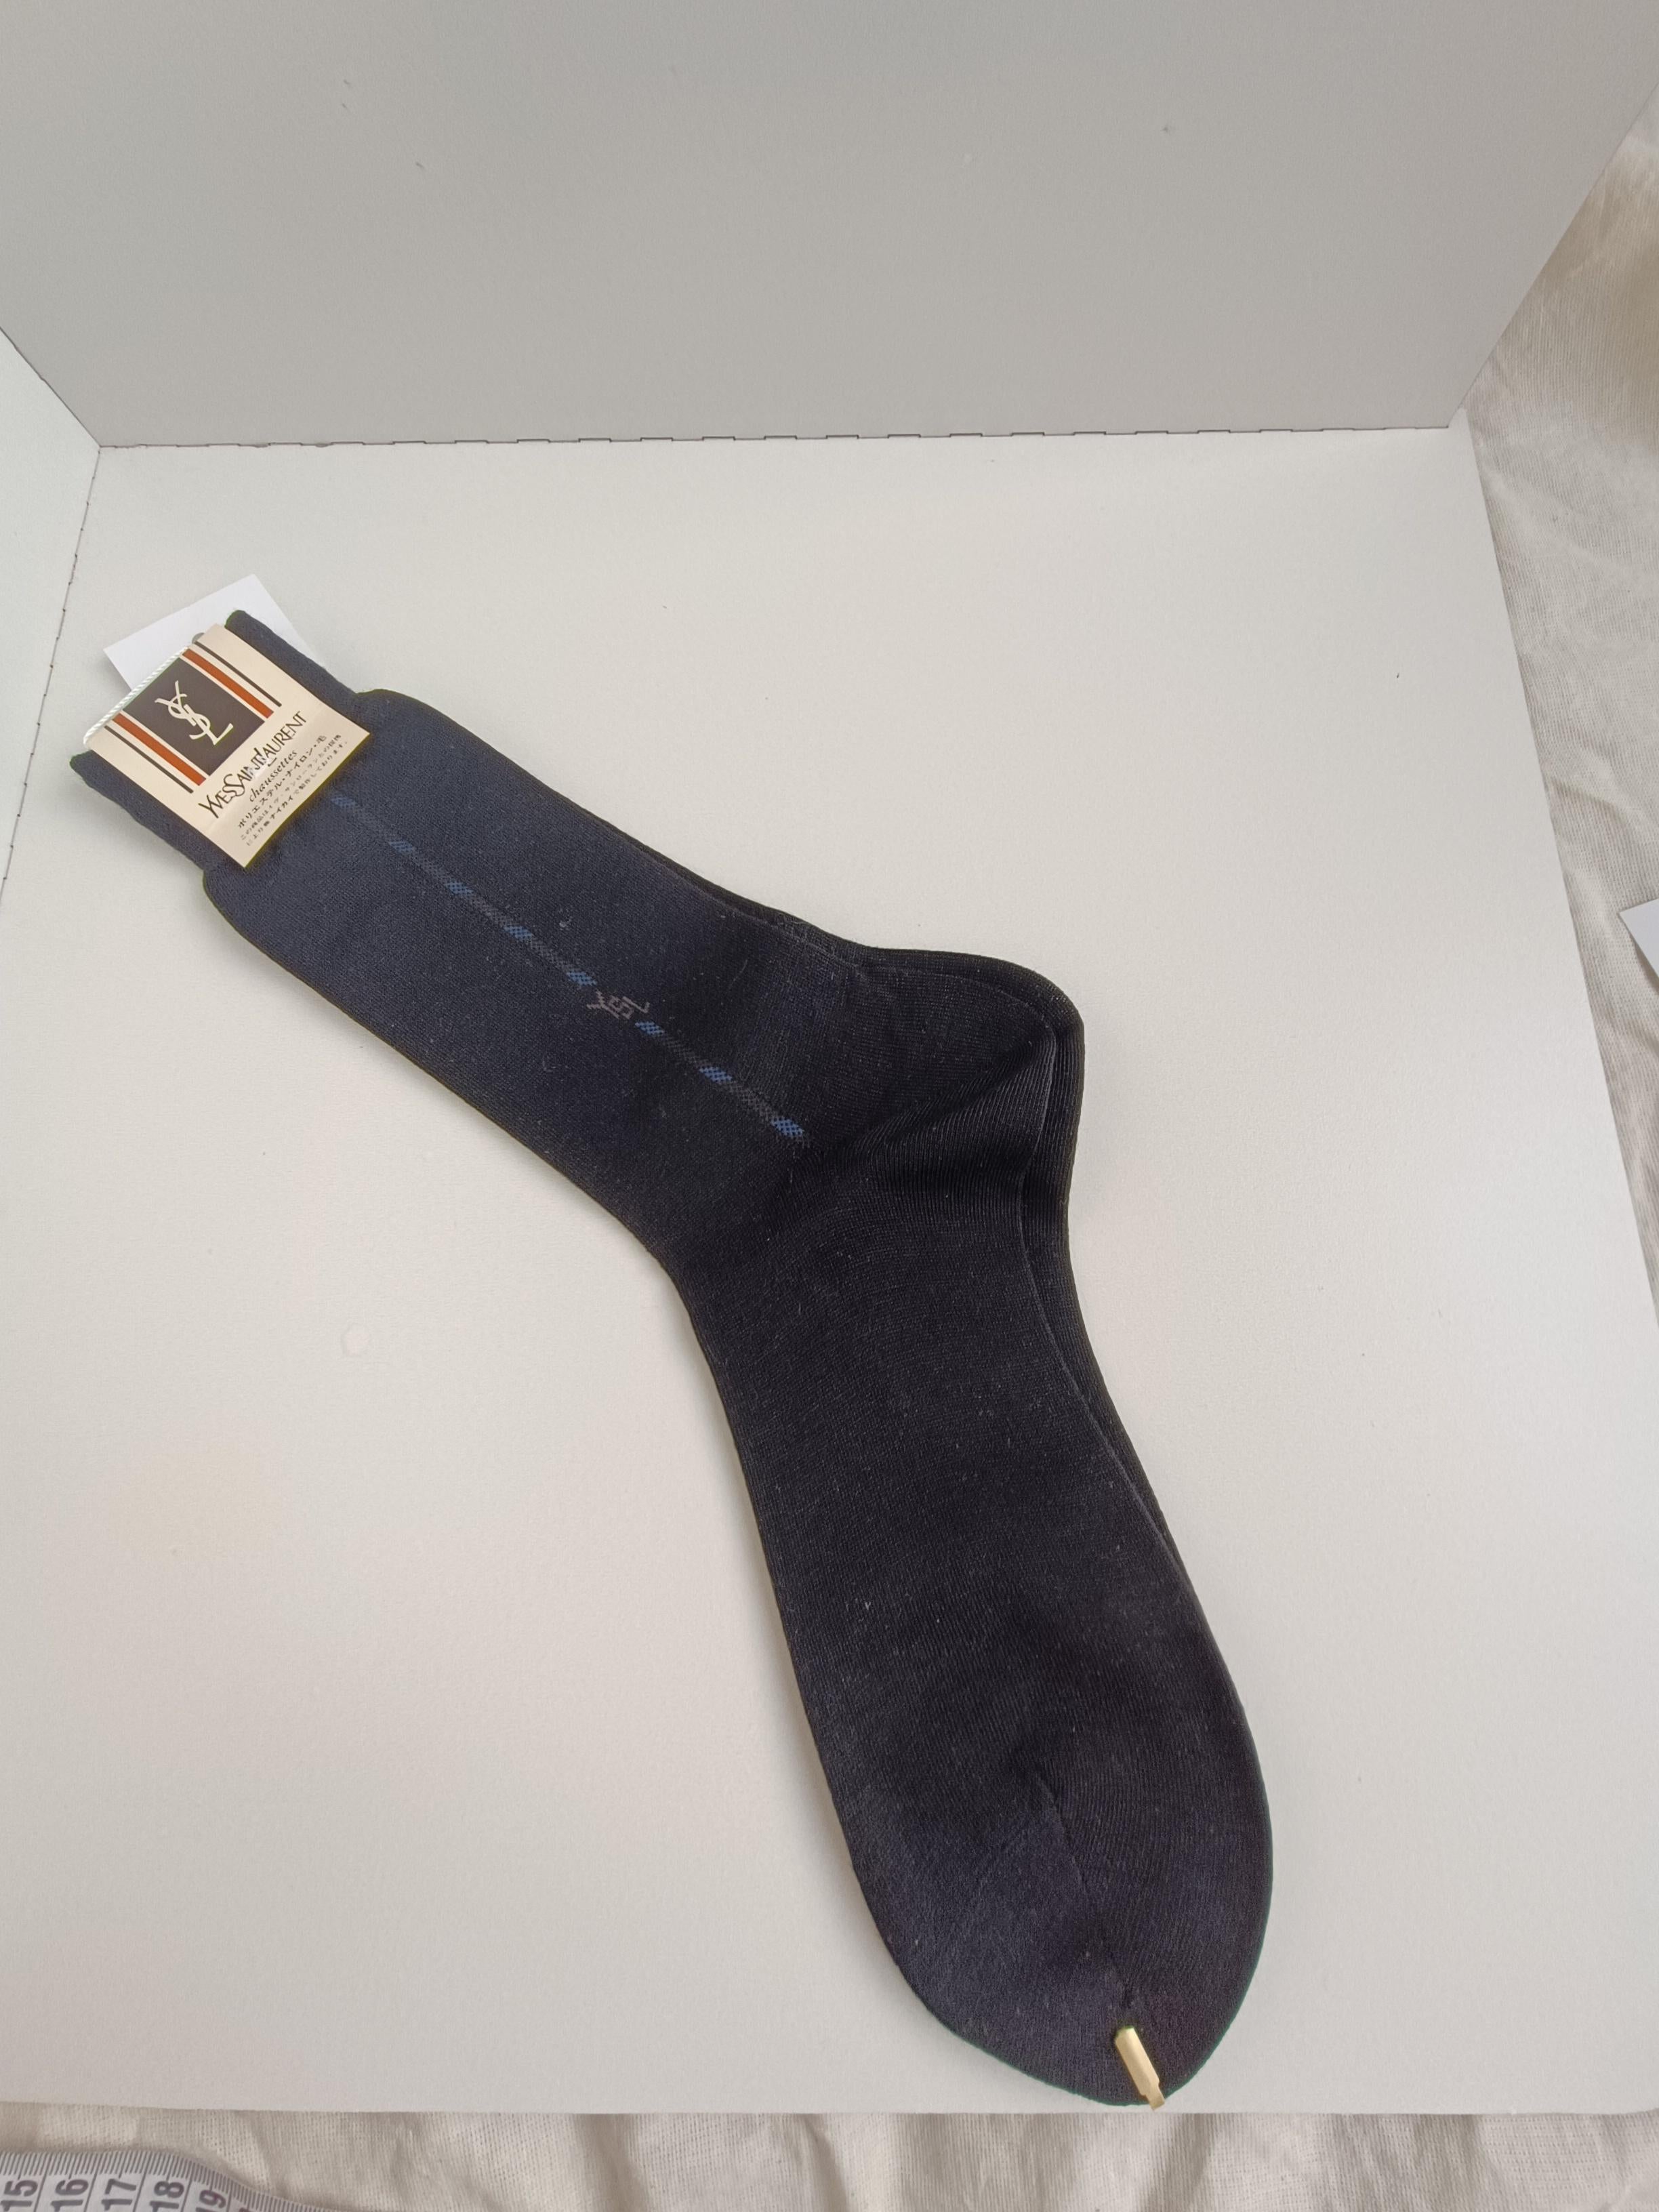 Authentische Yves Saint Laurent Vintage Herren Socken im Angebot 7